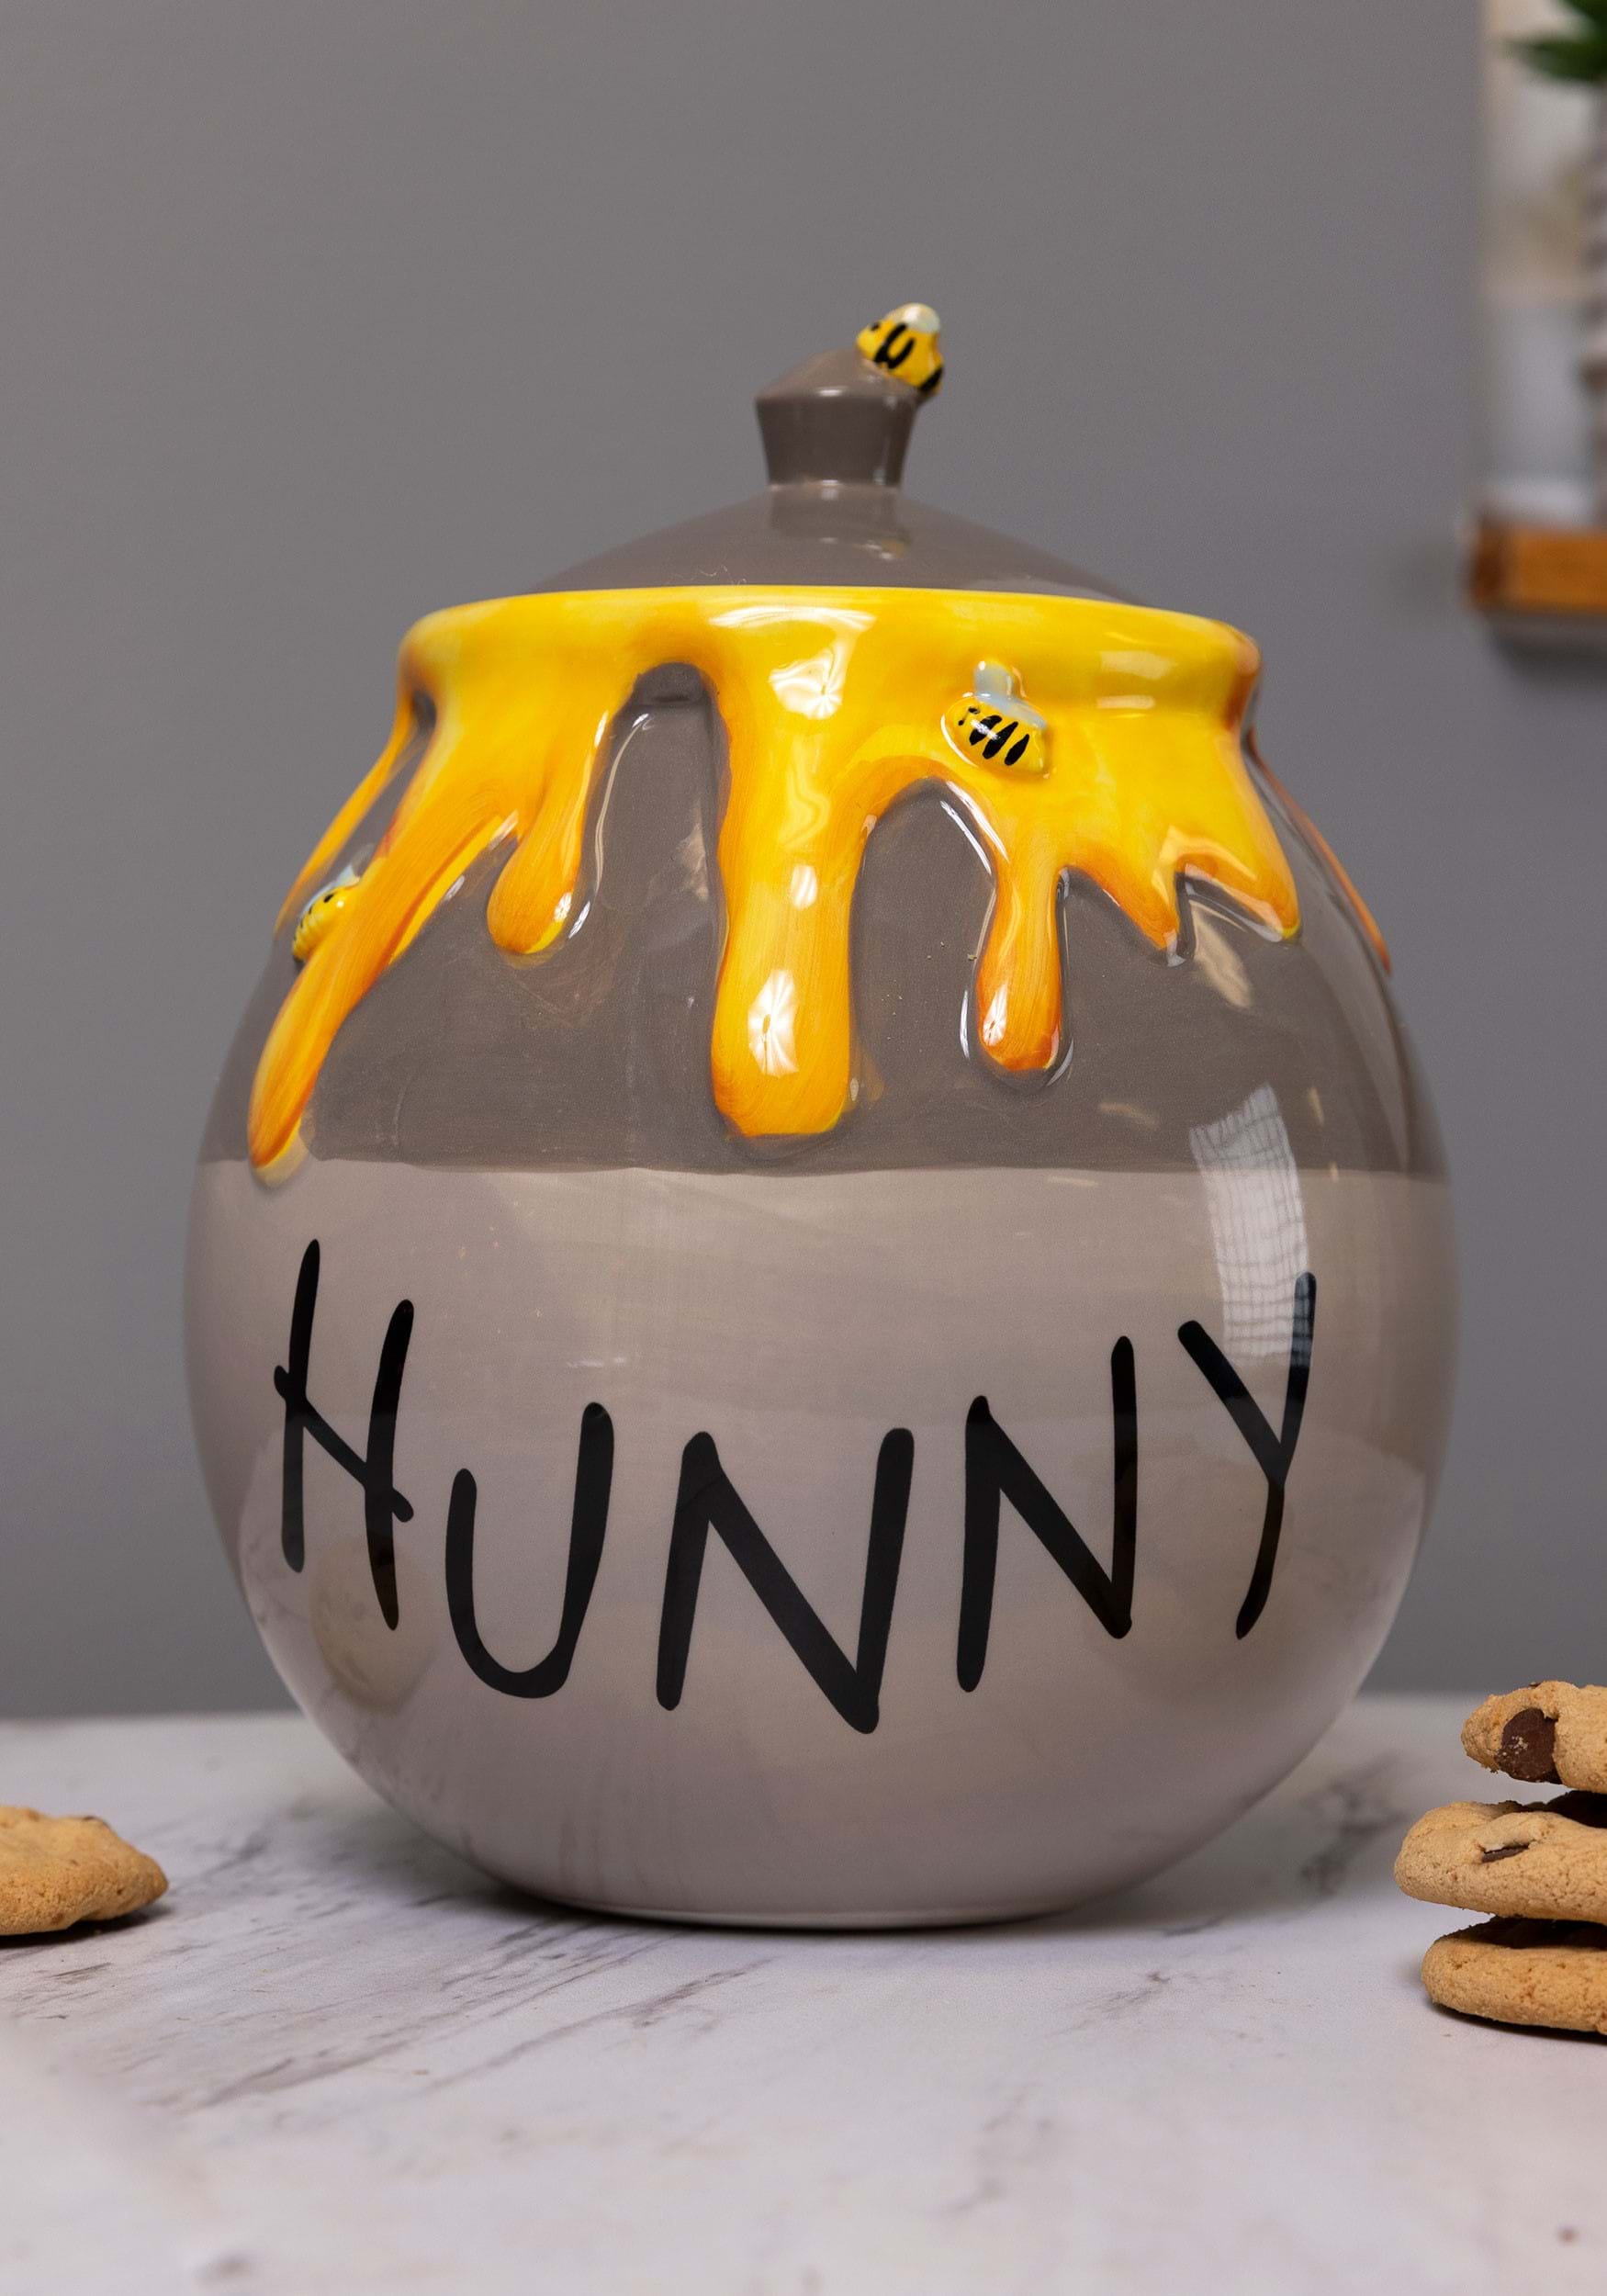 Winnie the Pooh Hunny Cookie Jar